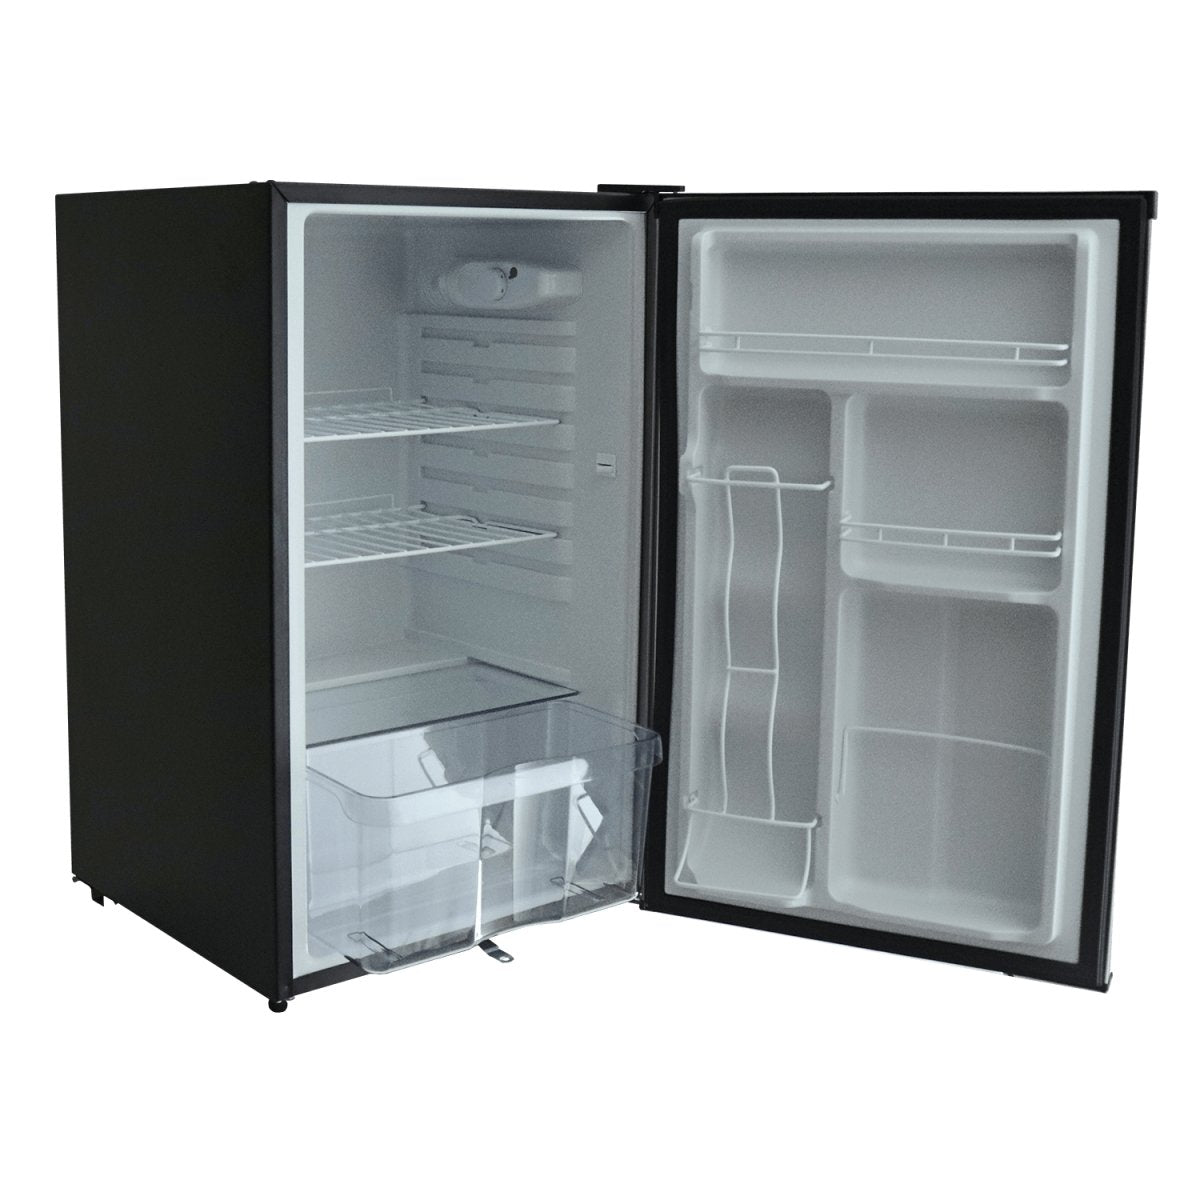 RCS Refrigerator Outdoor 4.5 Cu. Ft. REFR1A - Texas Star Grill Shop REFR1A